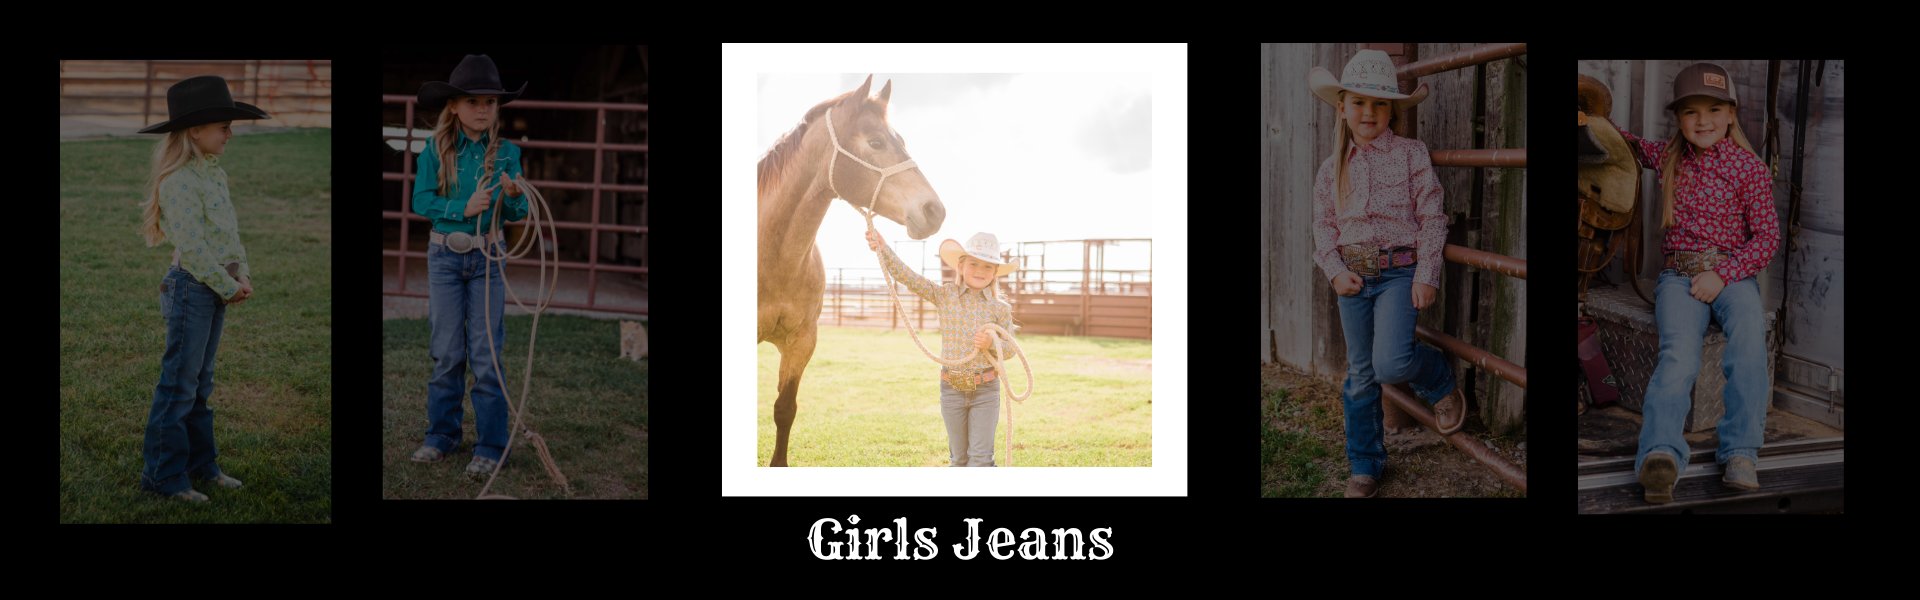 Girl's Jeans